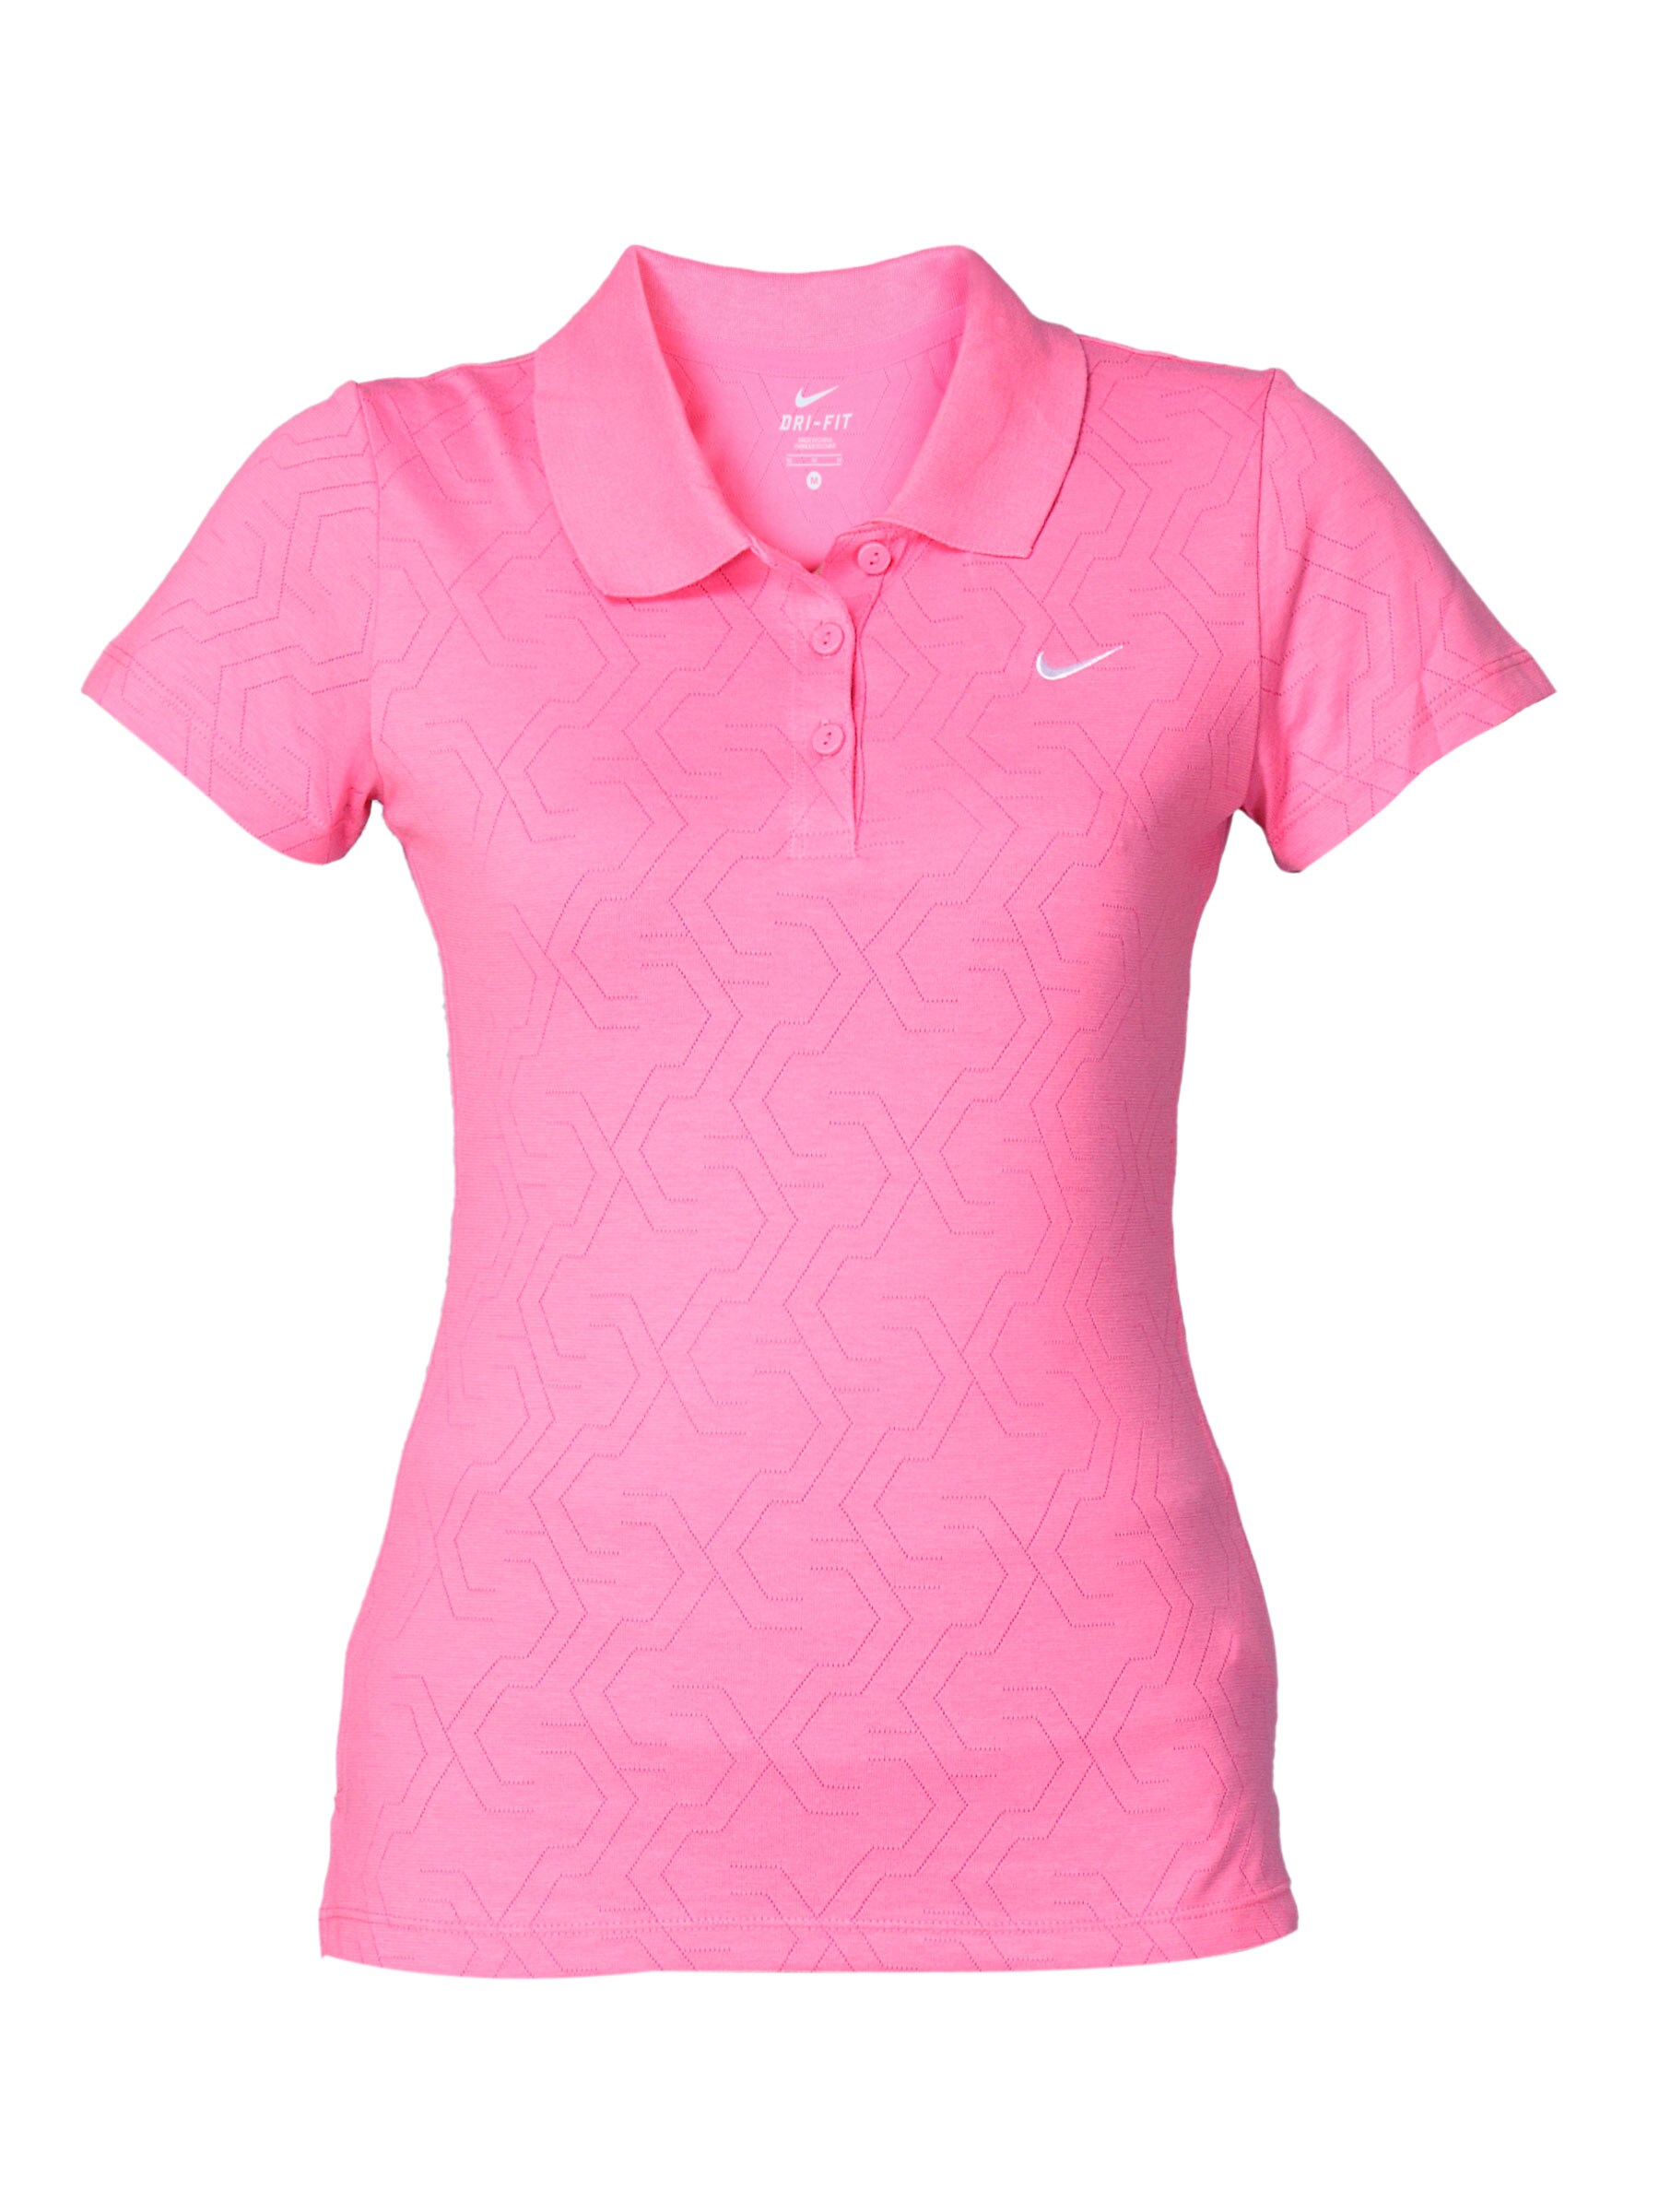 Nike Women's Smash Pink T-shirt